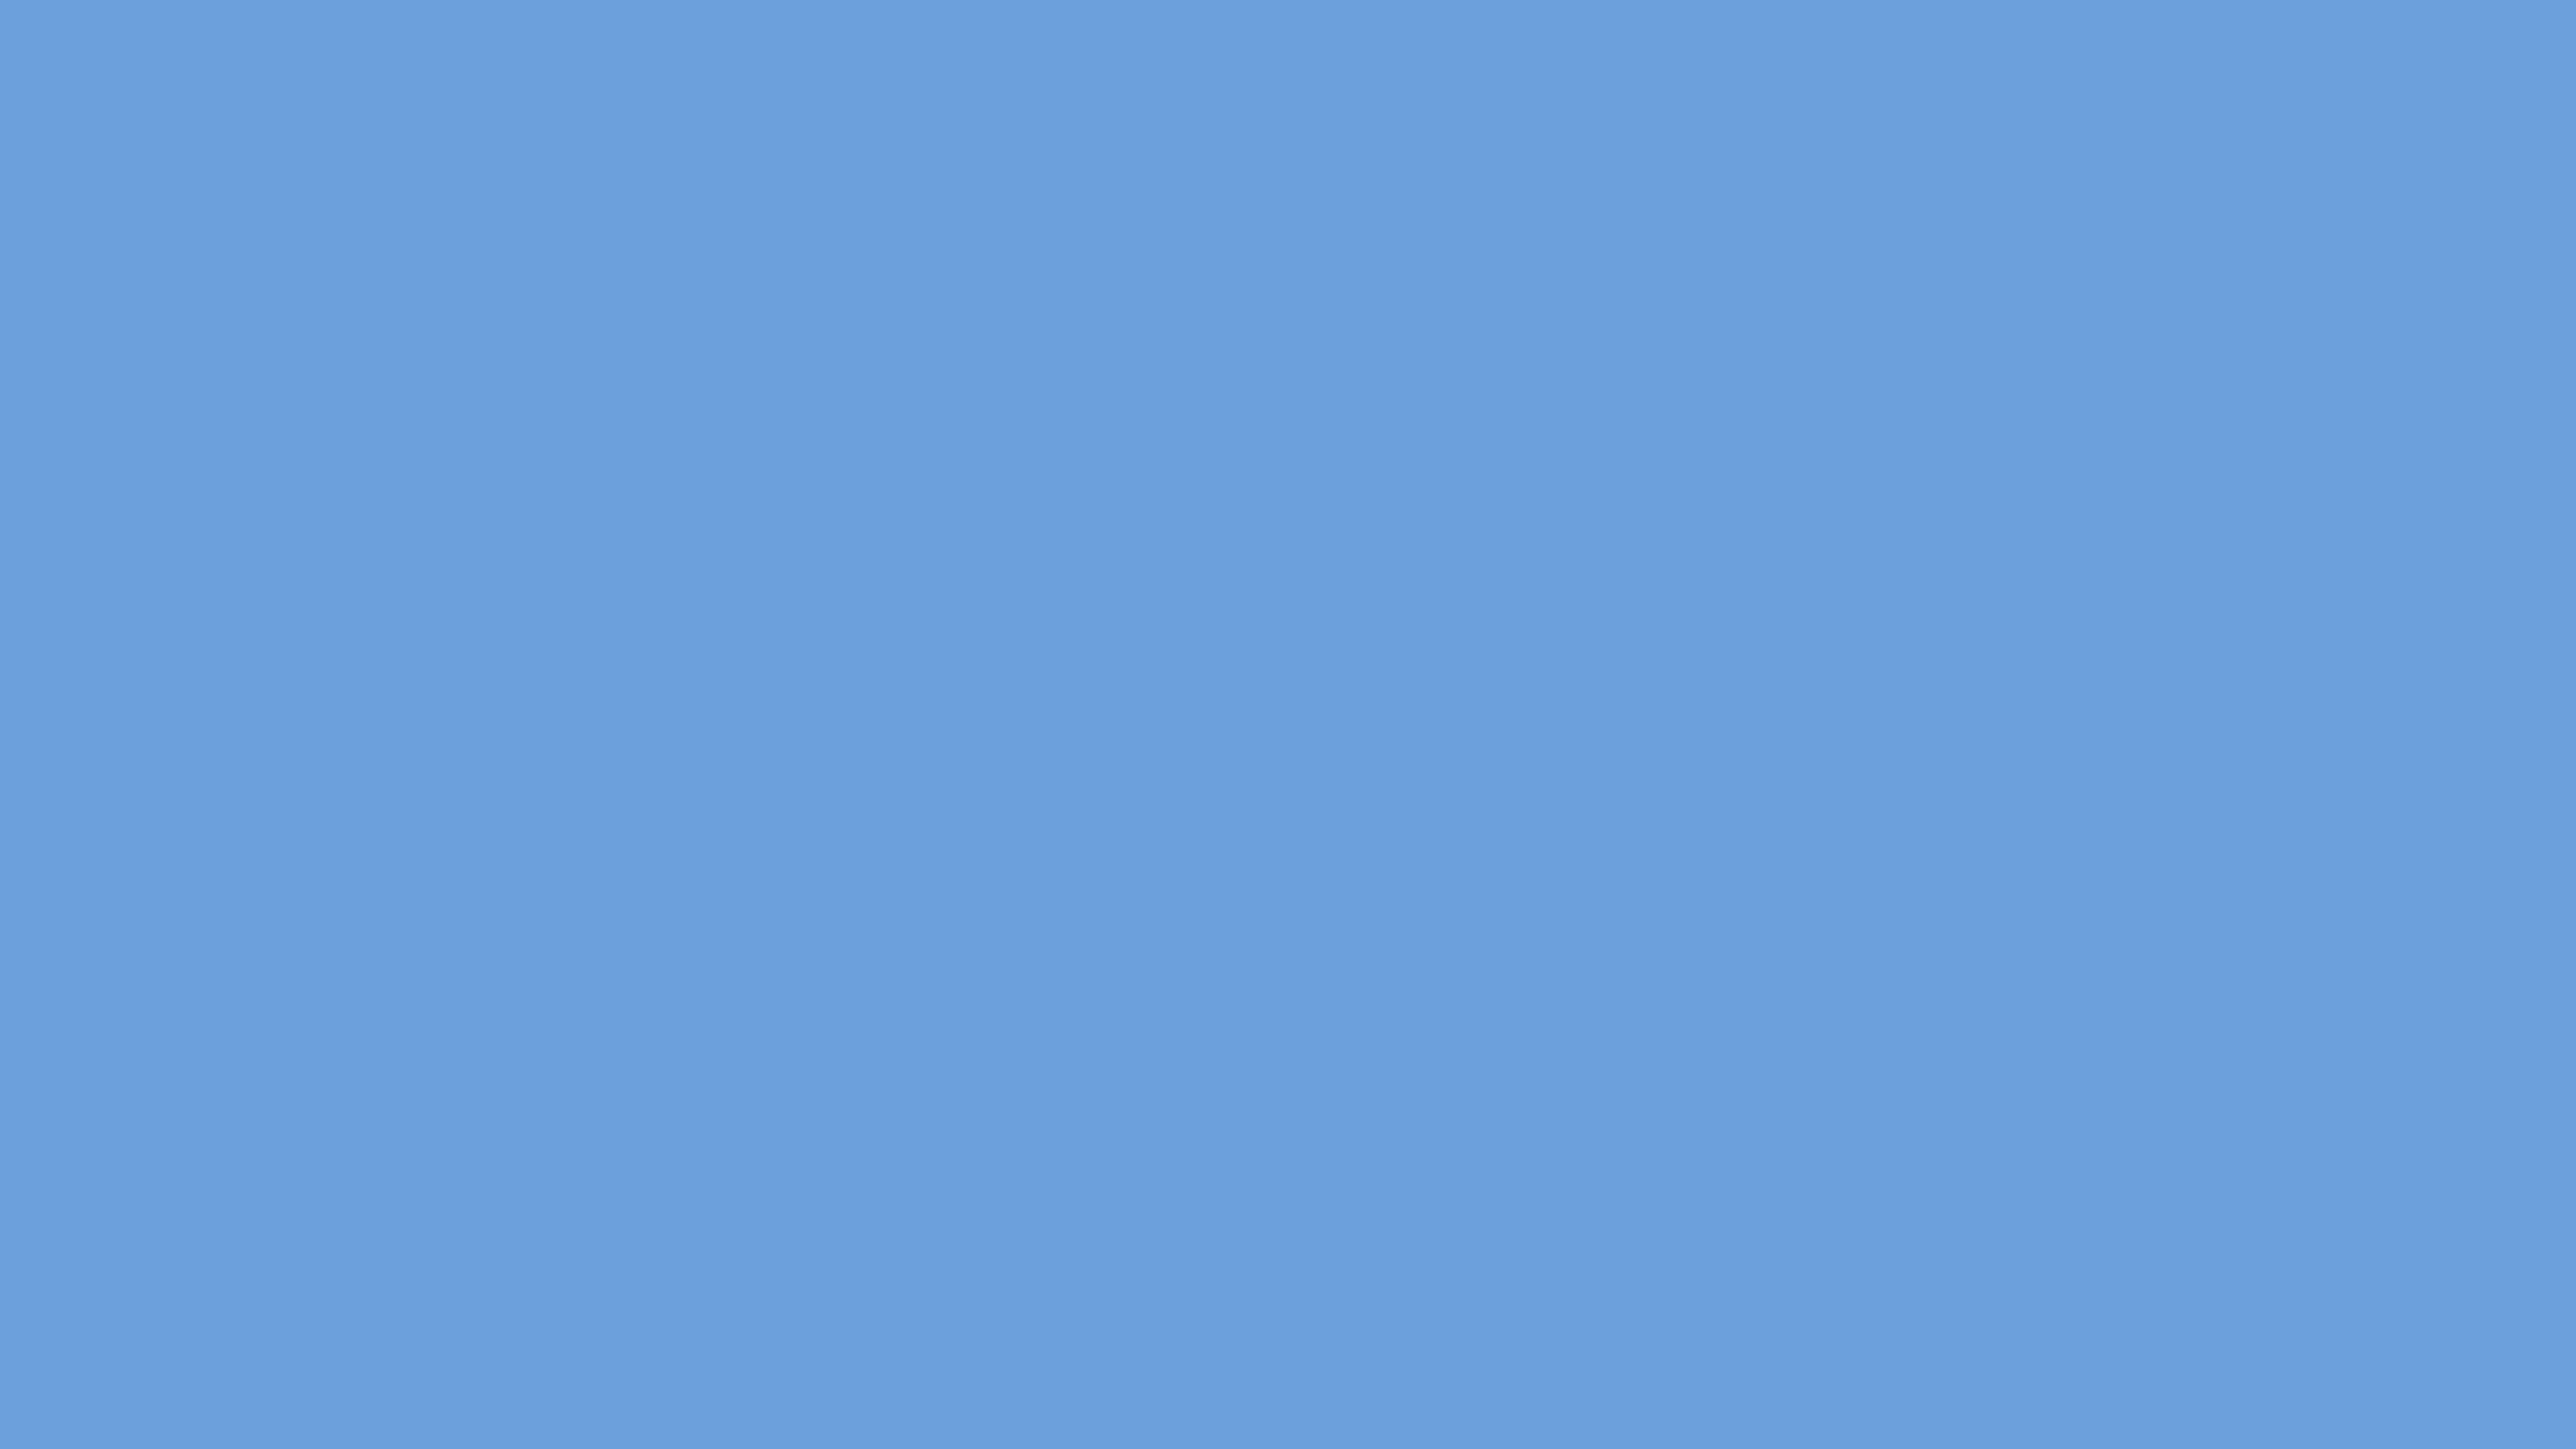 4096x2304 Little Boy Blue Solid Color Background